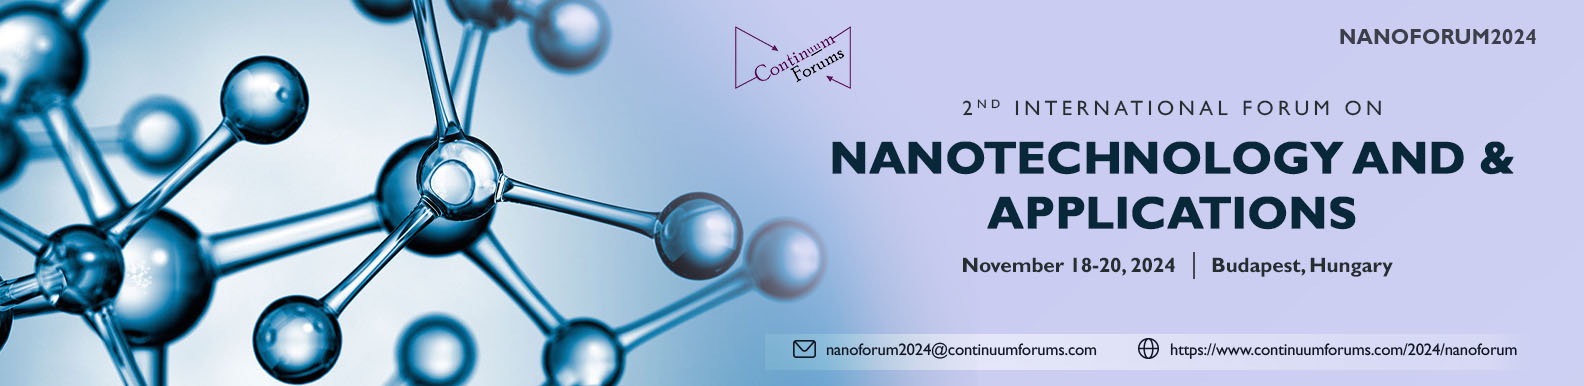 2nd International Forum on Nanotechnology and Applications